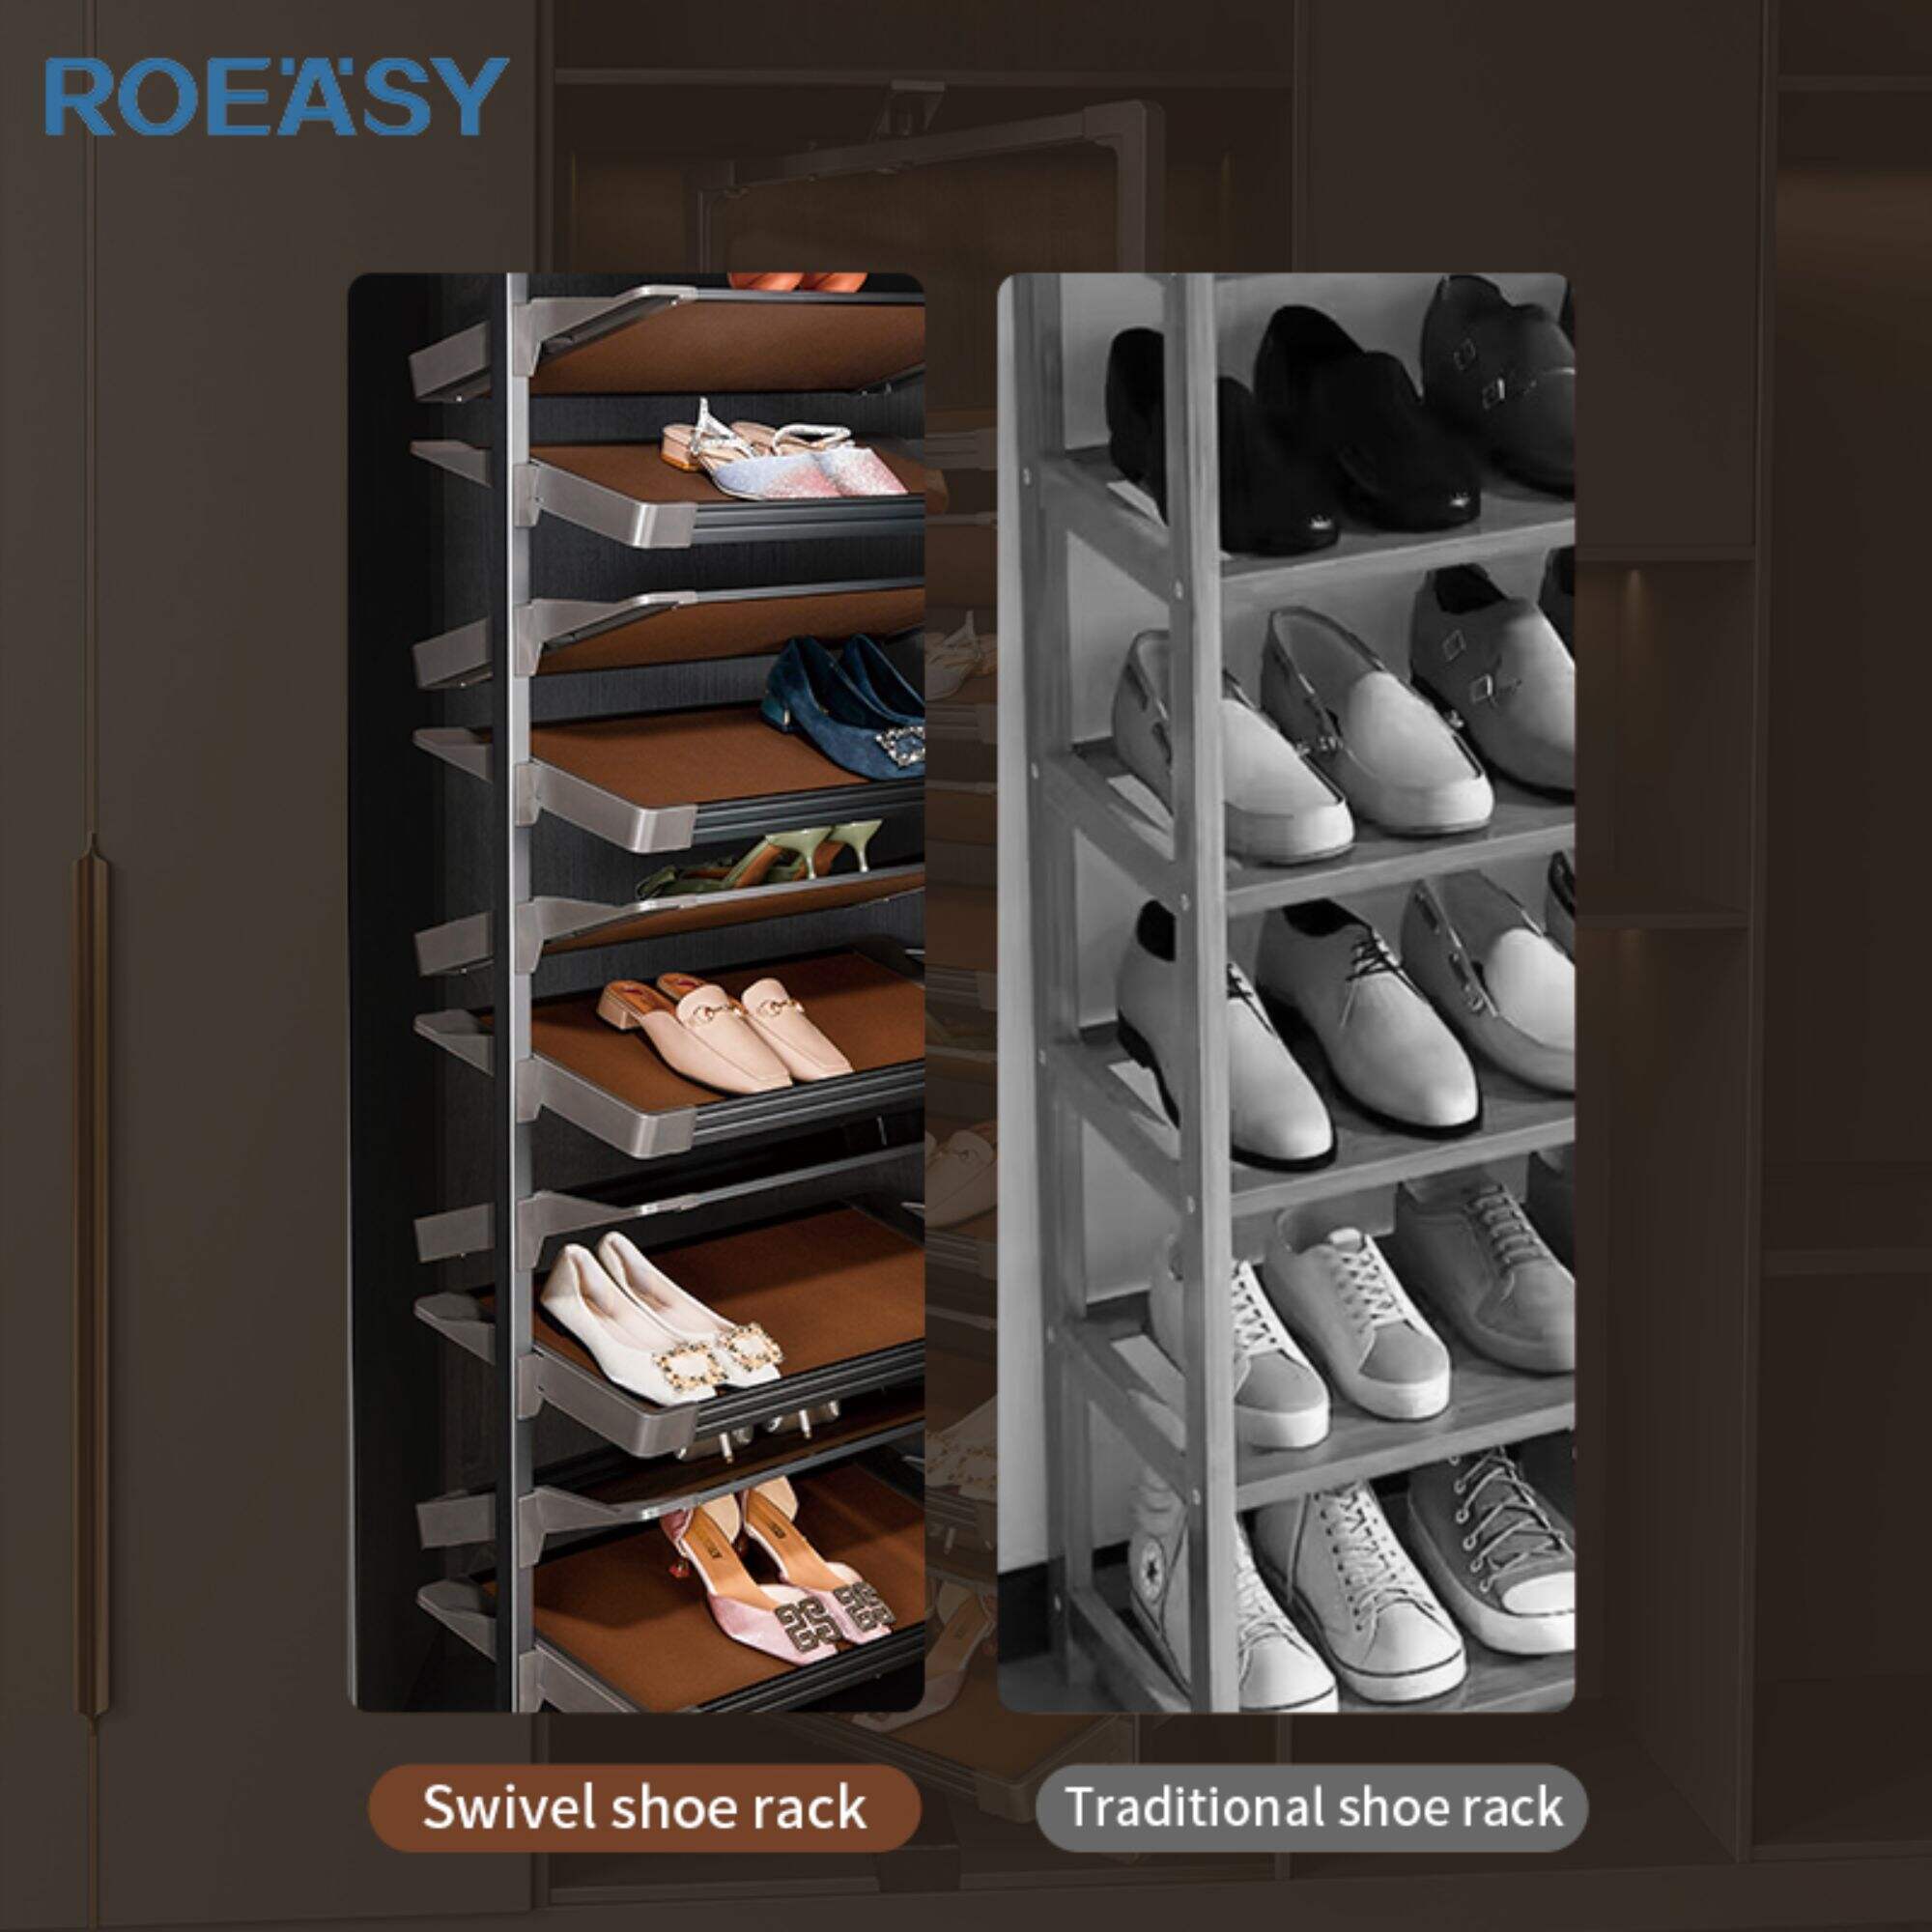 ROEASY R5001 Popular design 360 Degree Rotating Shoe Rack Adjustable Shoe Rack Wardrobe Revolving shoe Rack